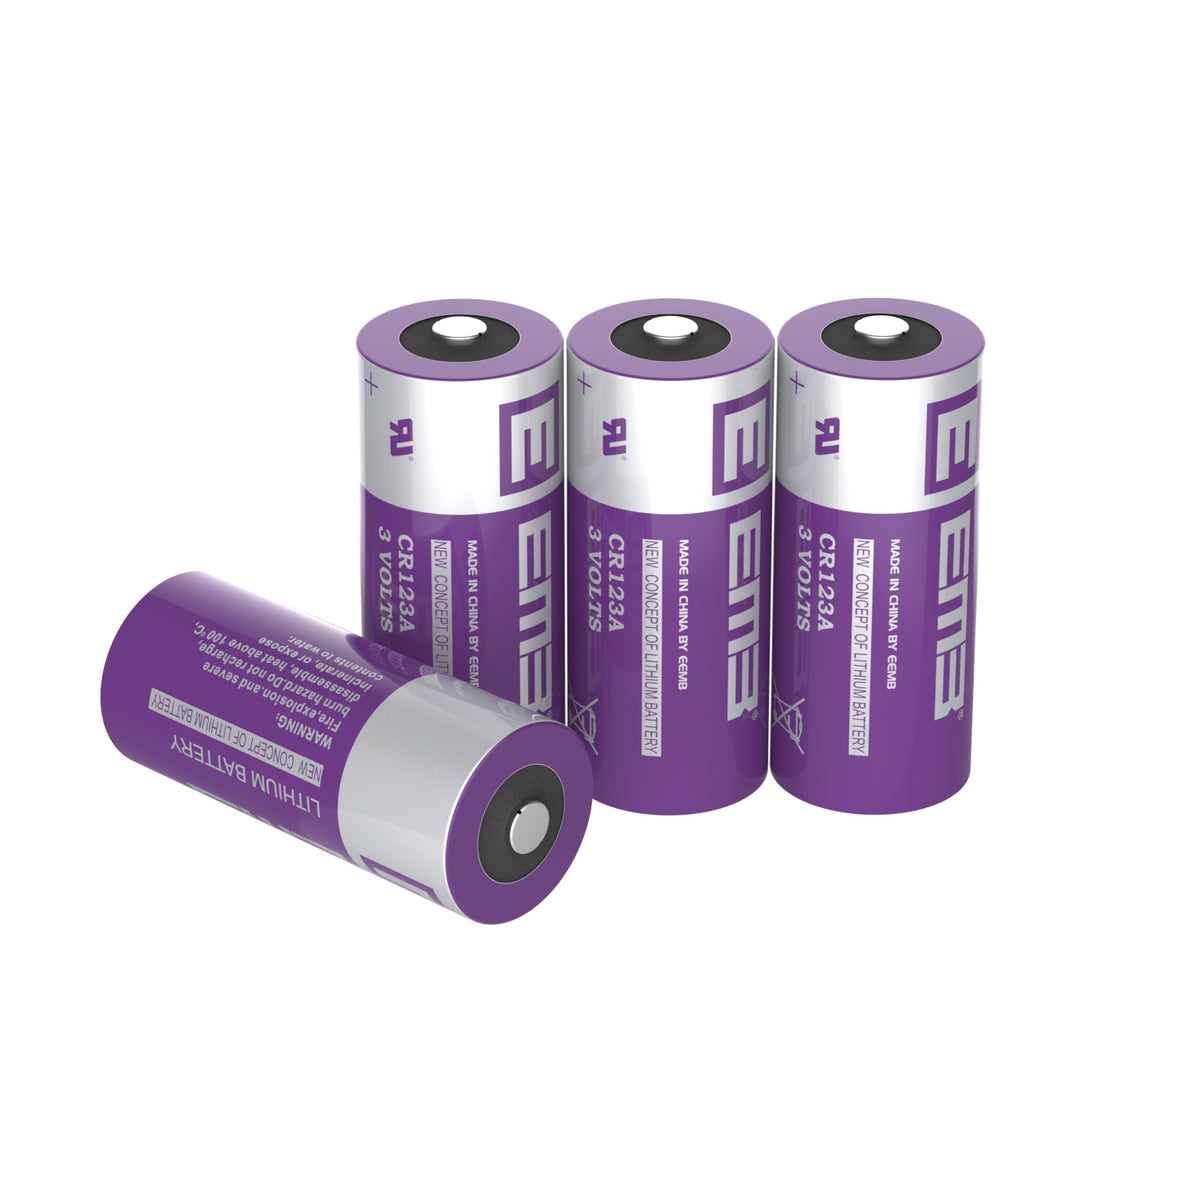 EEMB BATTERY CR123A - Li-MnO2 Lithium Battery, 3.0V, 1500 mAh 